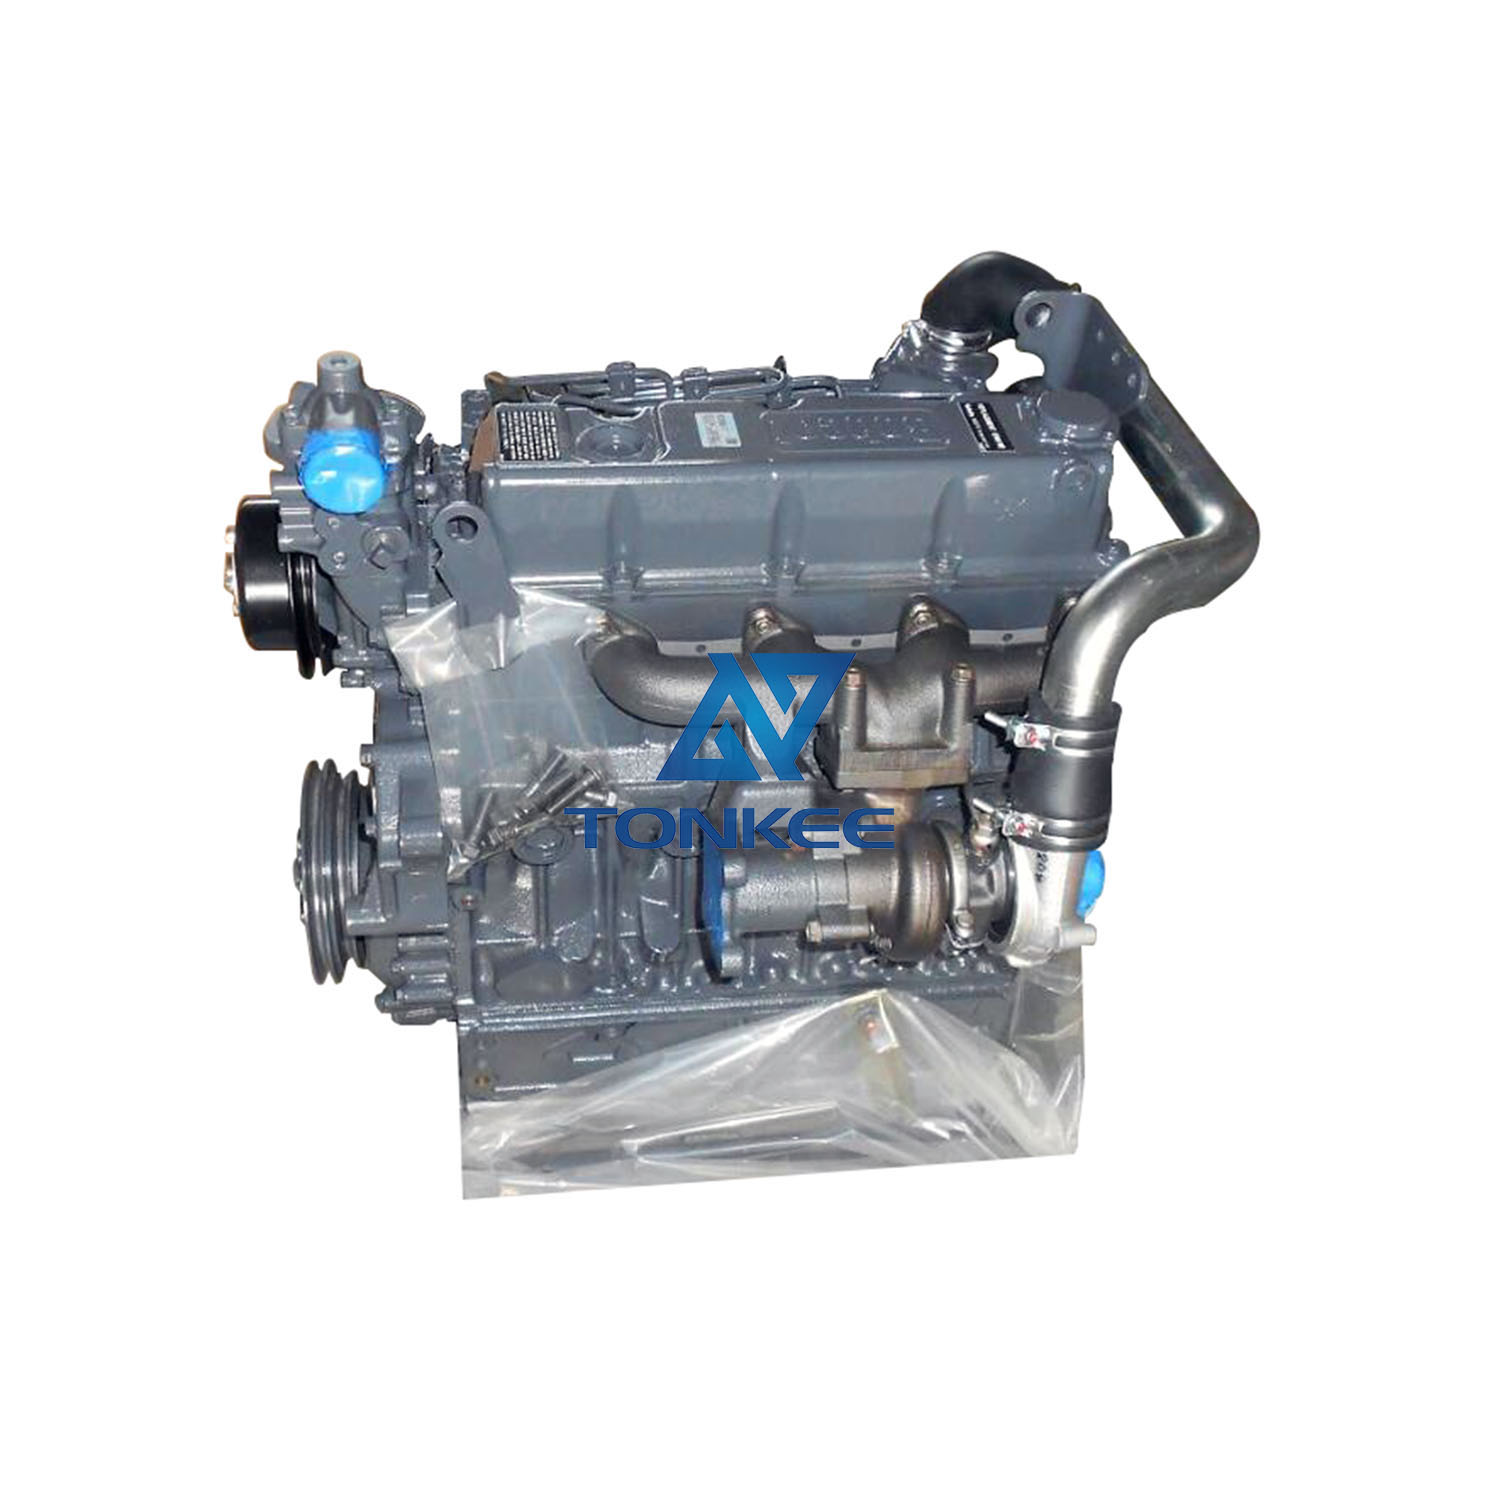 6684576 1G578-00000 diesel engine assembly  V3300DI-T-E2CB-BOB2 V3300 tire 2 S220 S250 S300 skid loader diesel engine assy suitable for BOBCAT KUBOTA